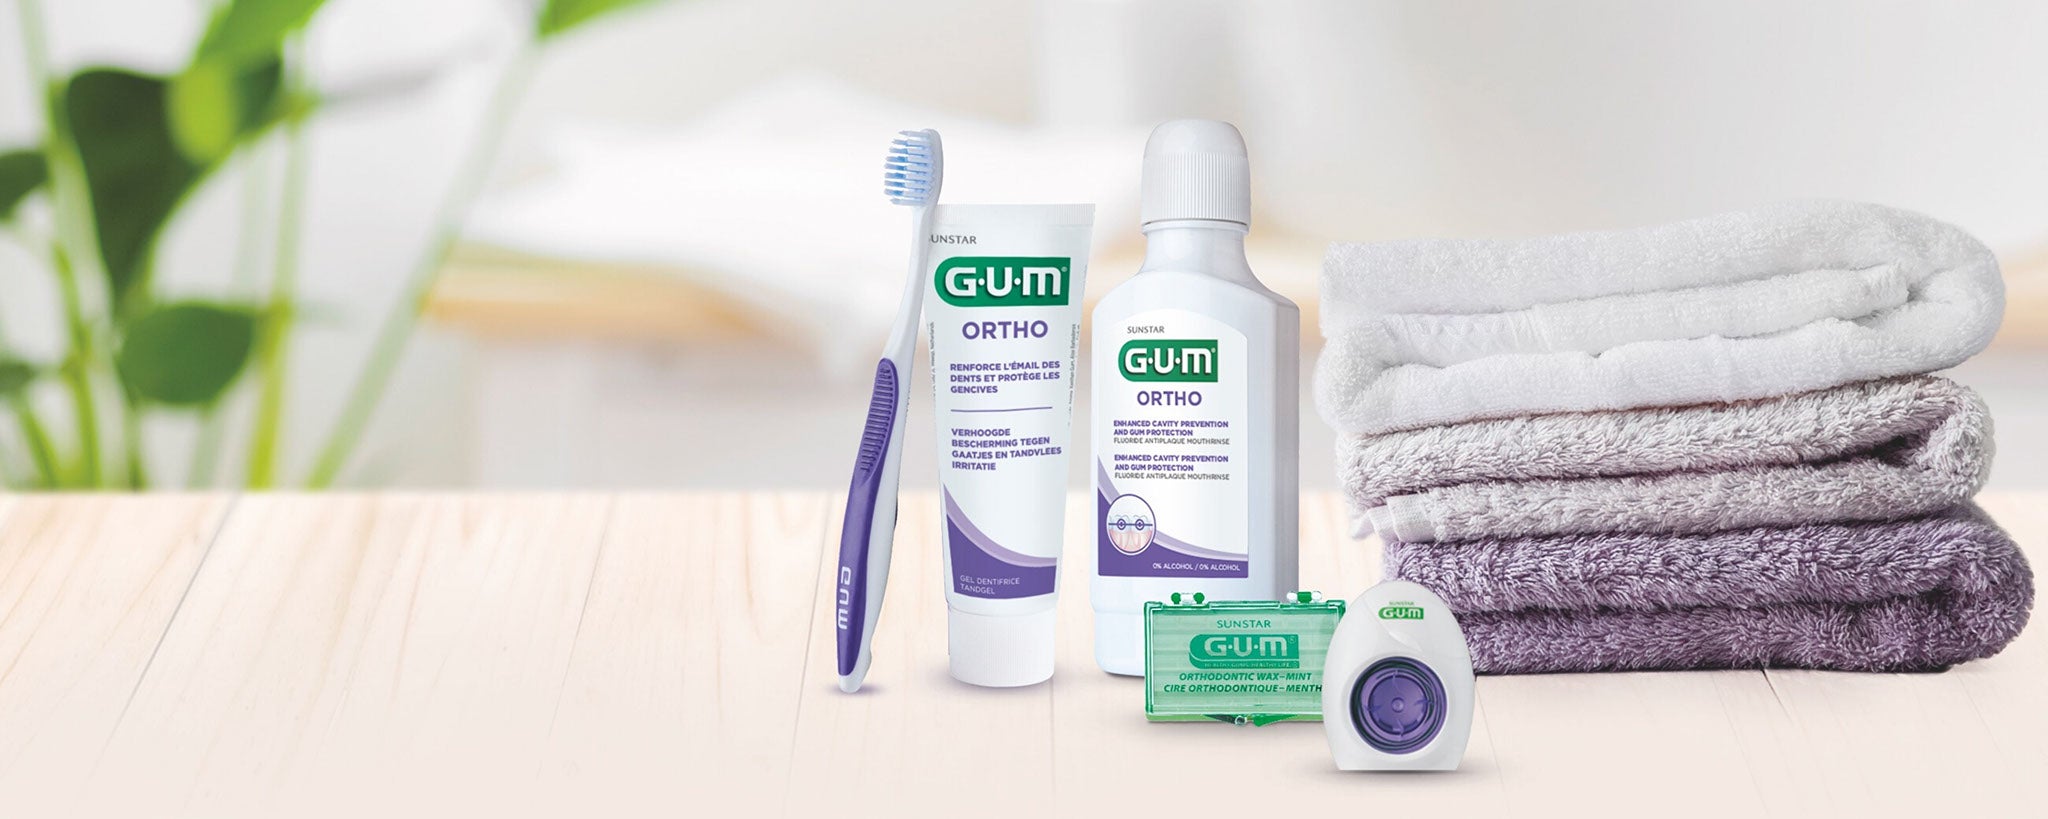 GUM® ActiVital product range